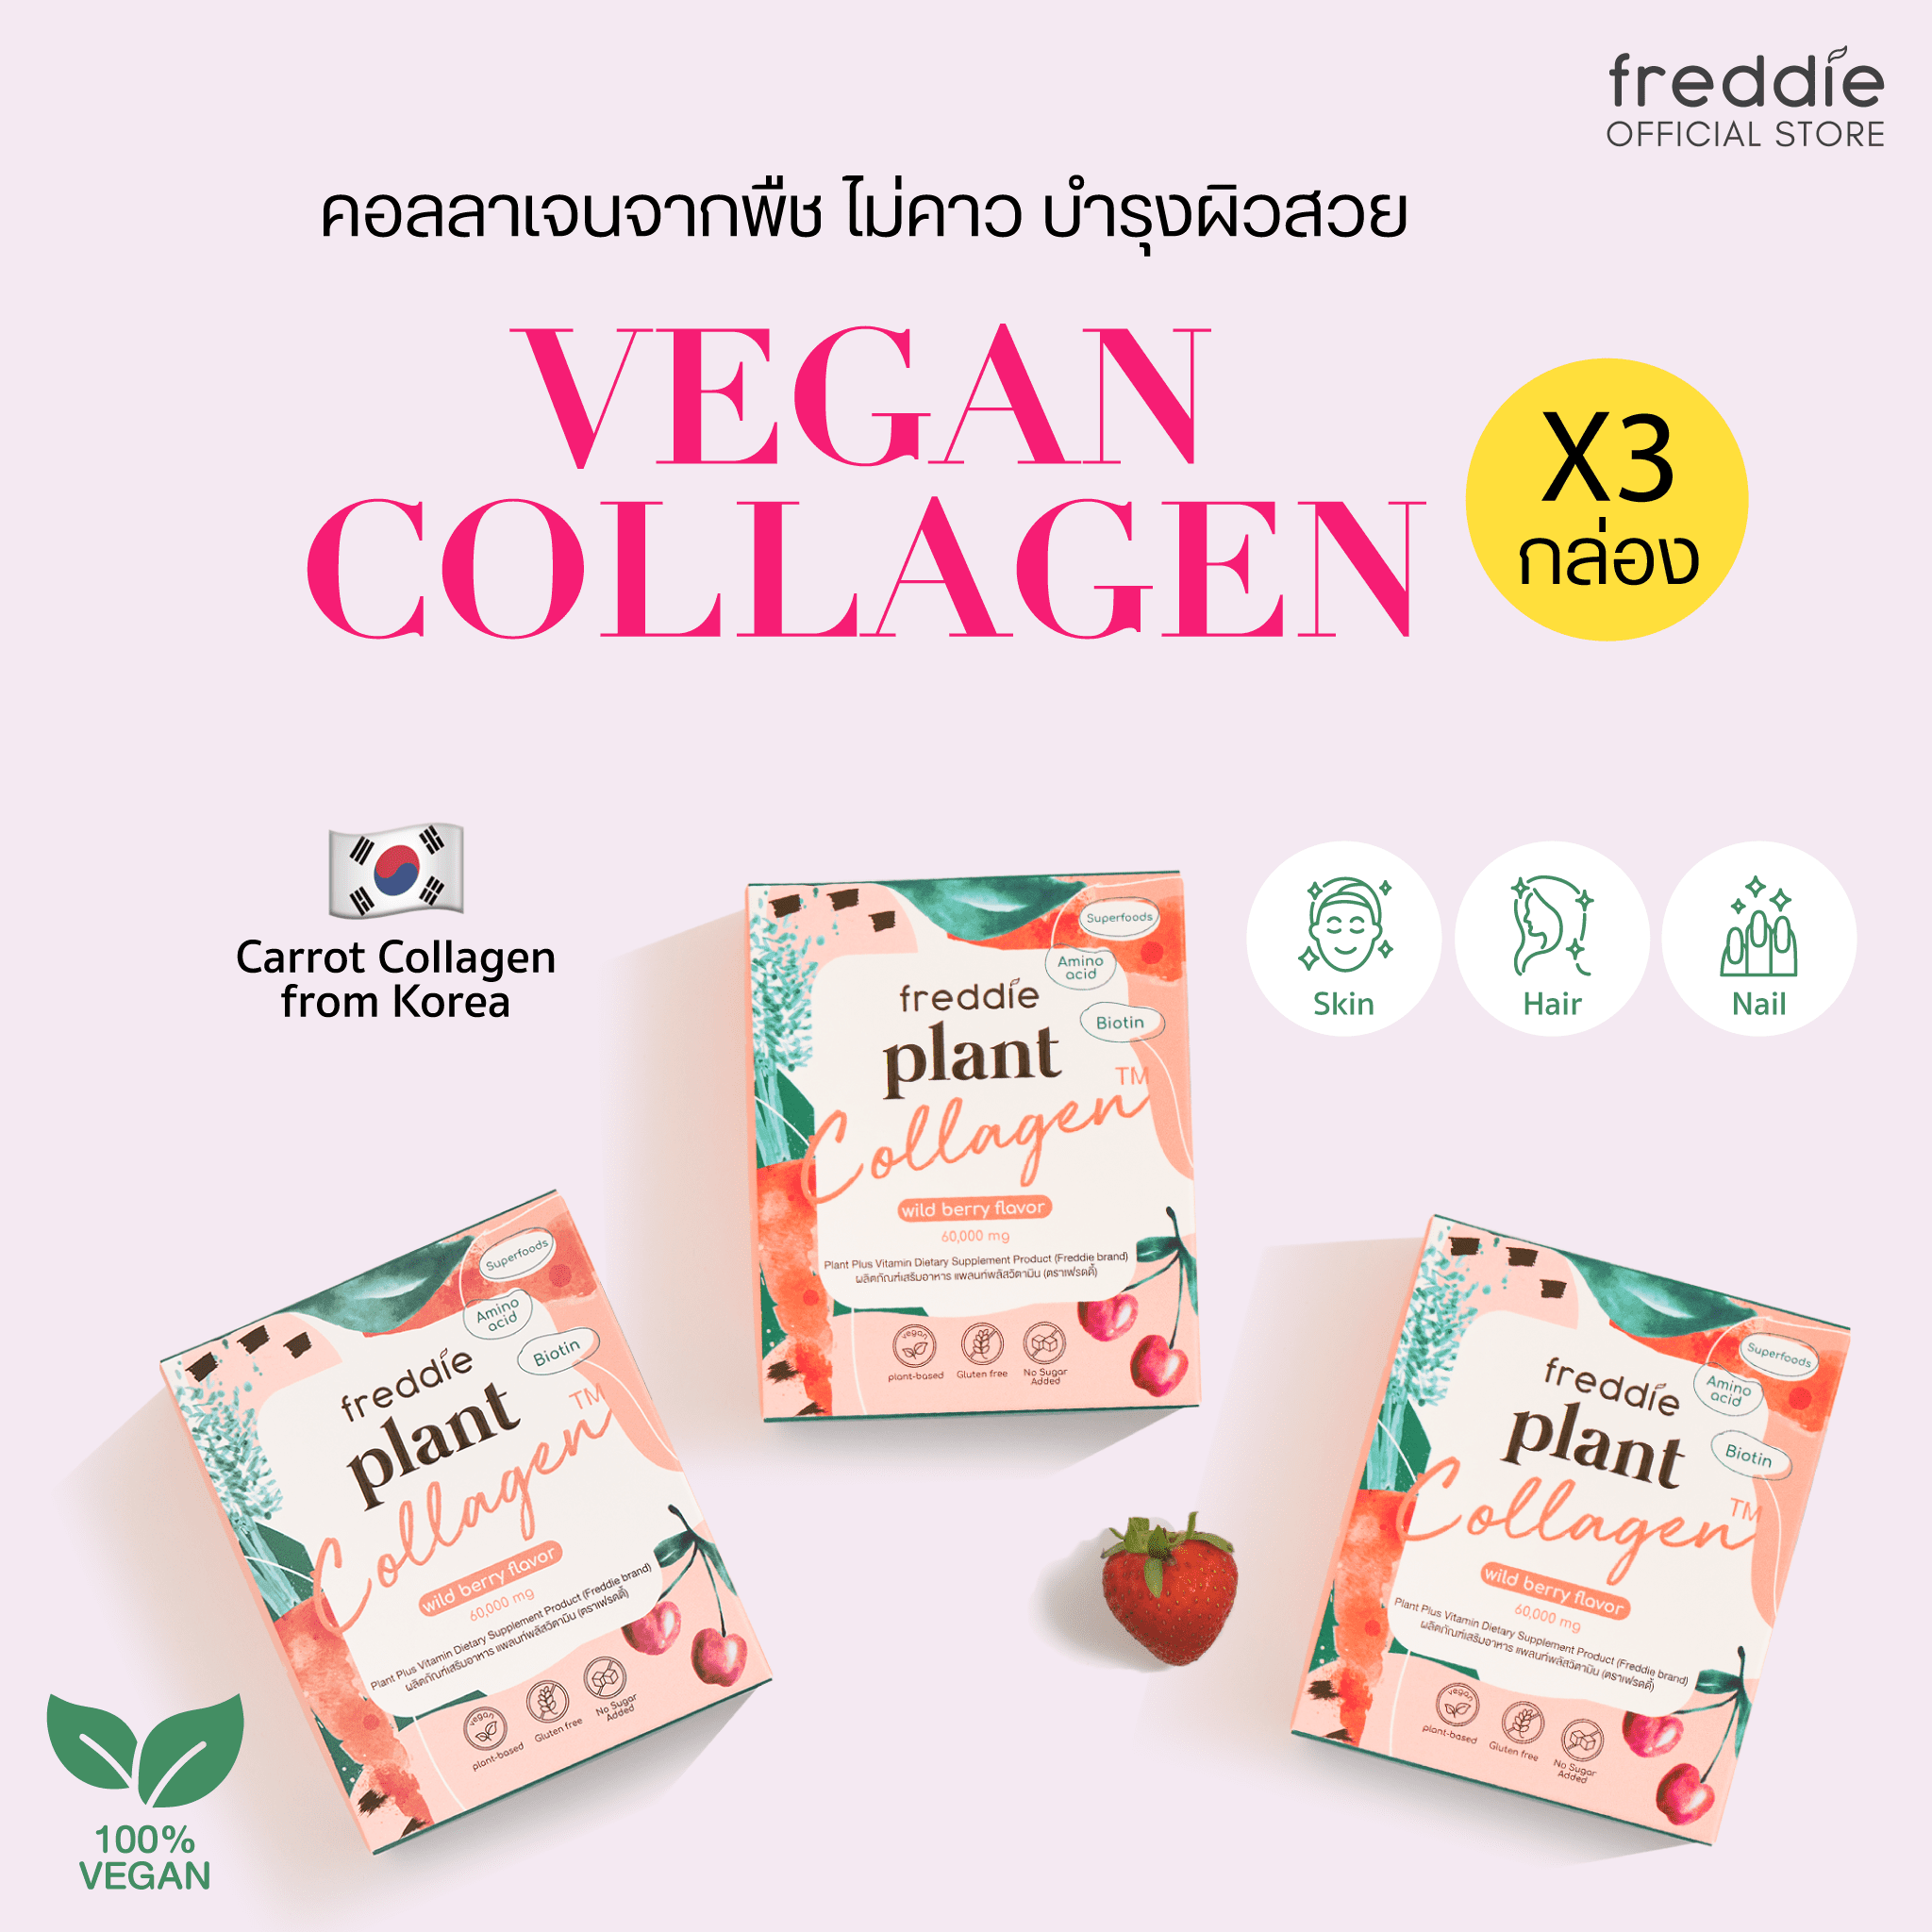 New Lot 3 กล่อง Freddie Plant Collagen เฟรดดี้ คอลลาเจนจากพืช vegan collagen เผยผิวสวยใสสุขภาพดี